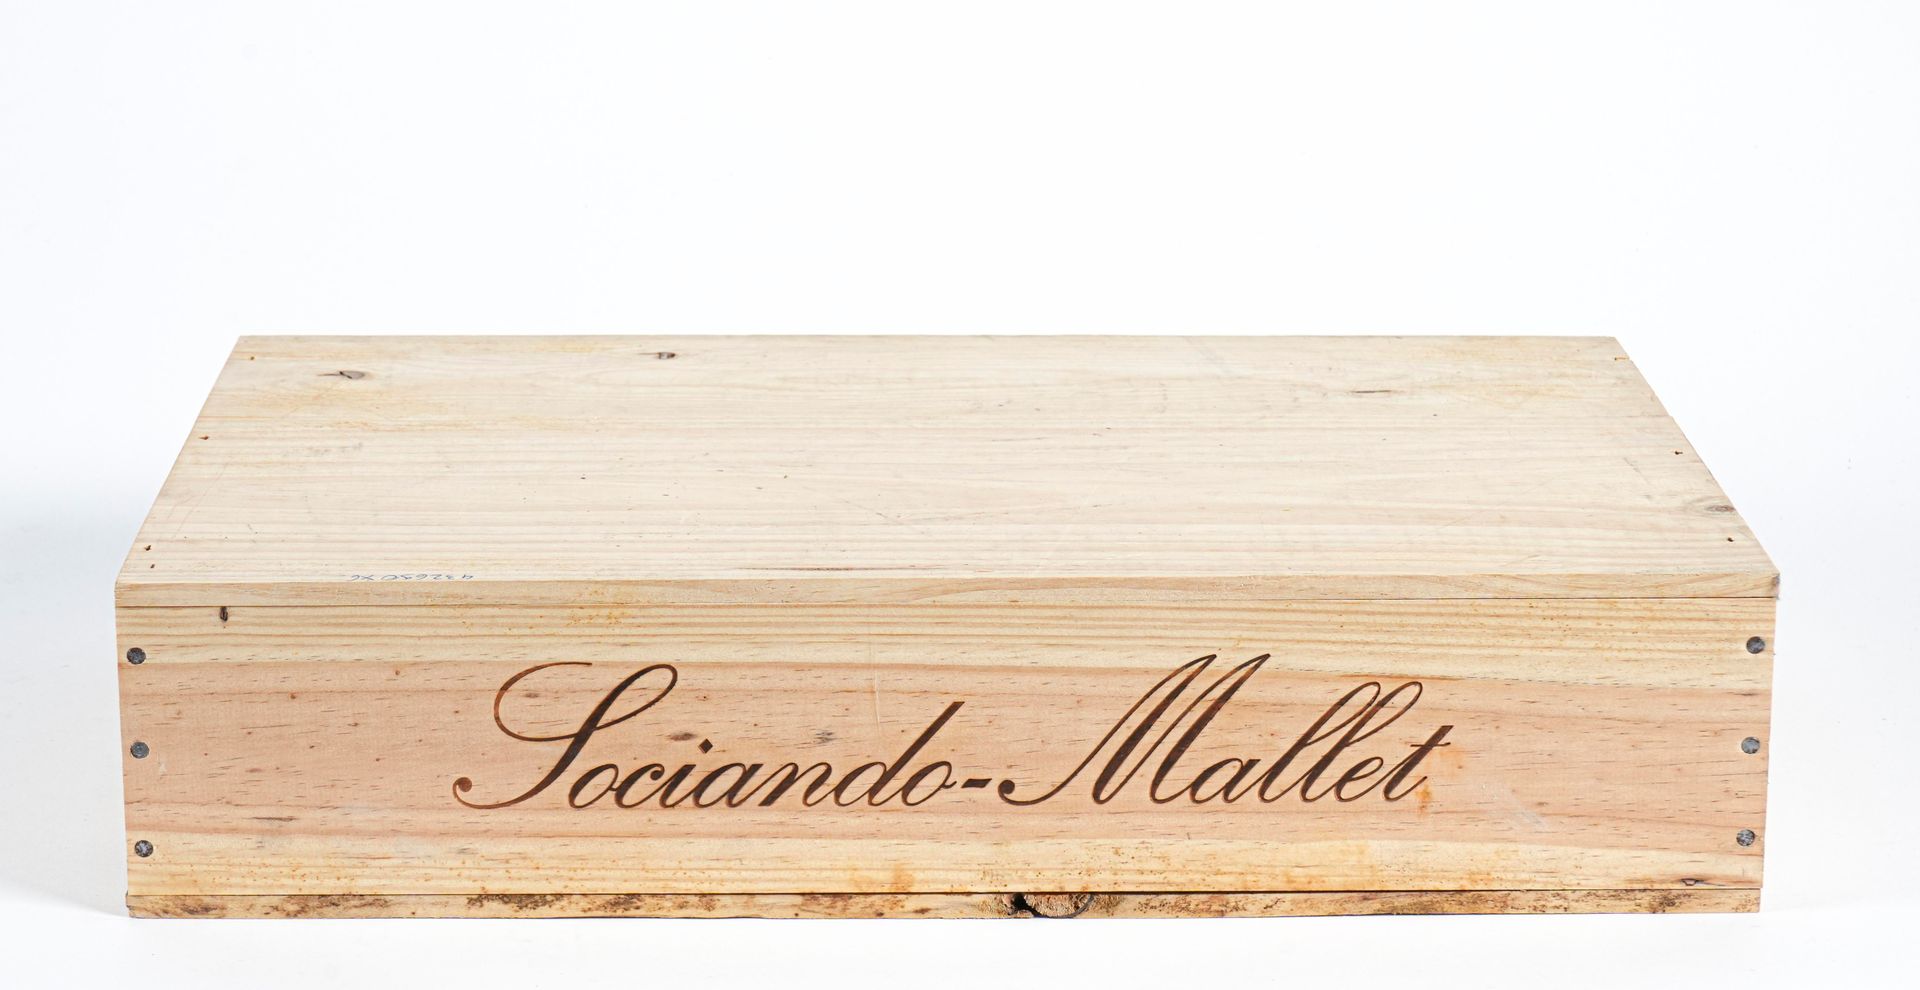 Null 6 B CHÂTEAU SOCIANDO-MALLET (original wooden case) Haut-Médoc 2007